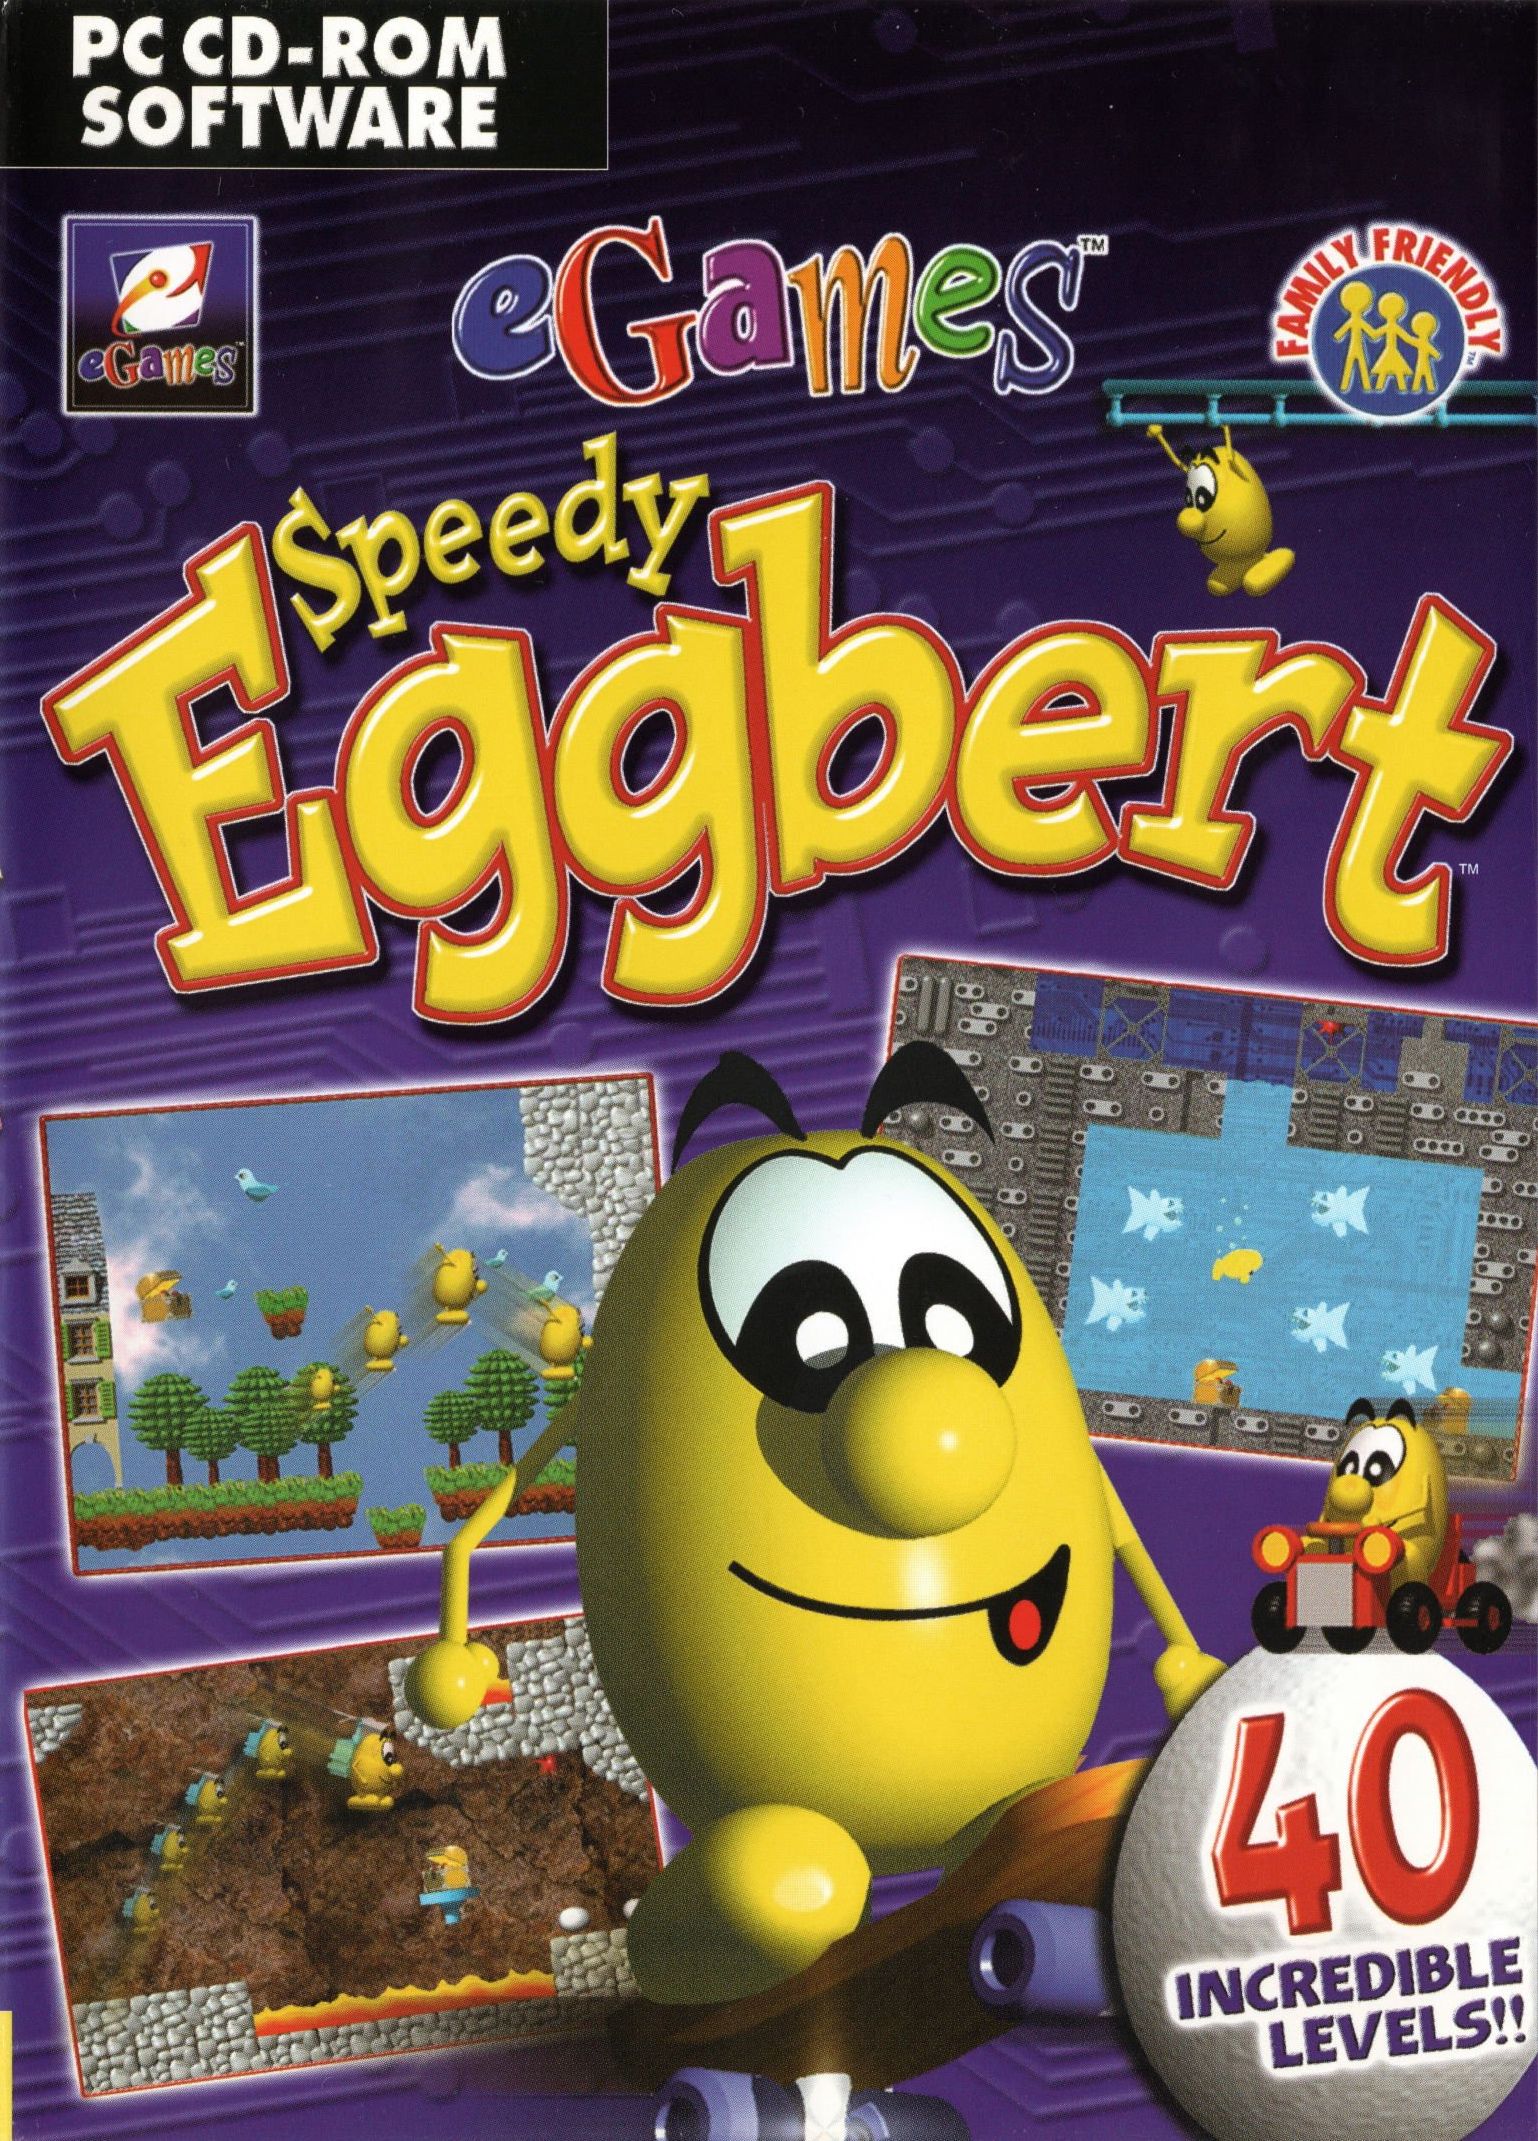 Breaktime Presents Speedy Eggbert PC CD-ROM Windows 95/98/ME 